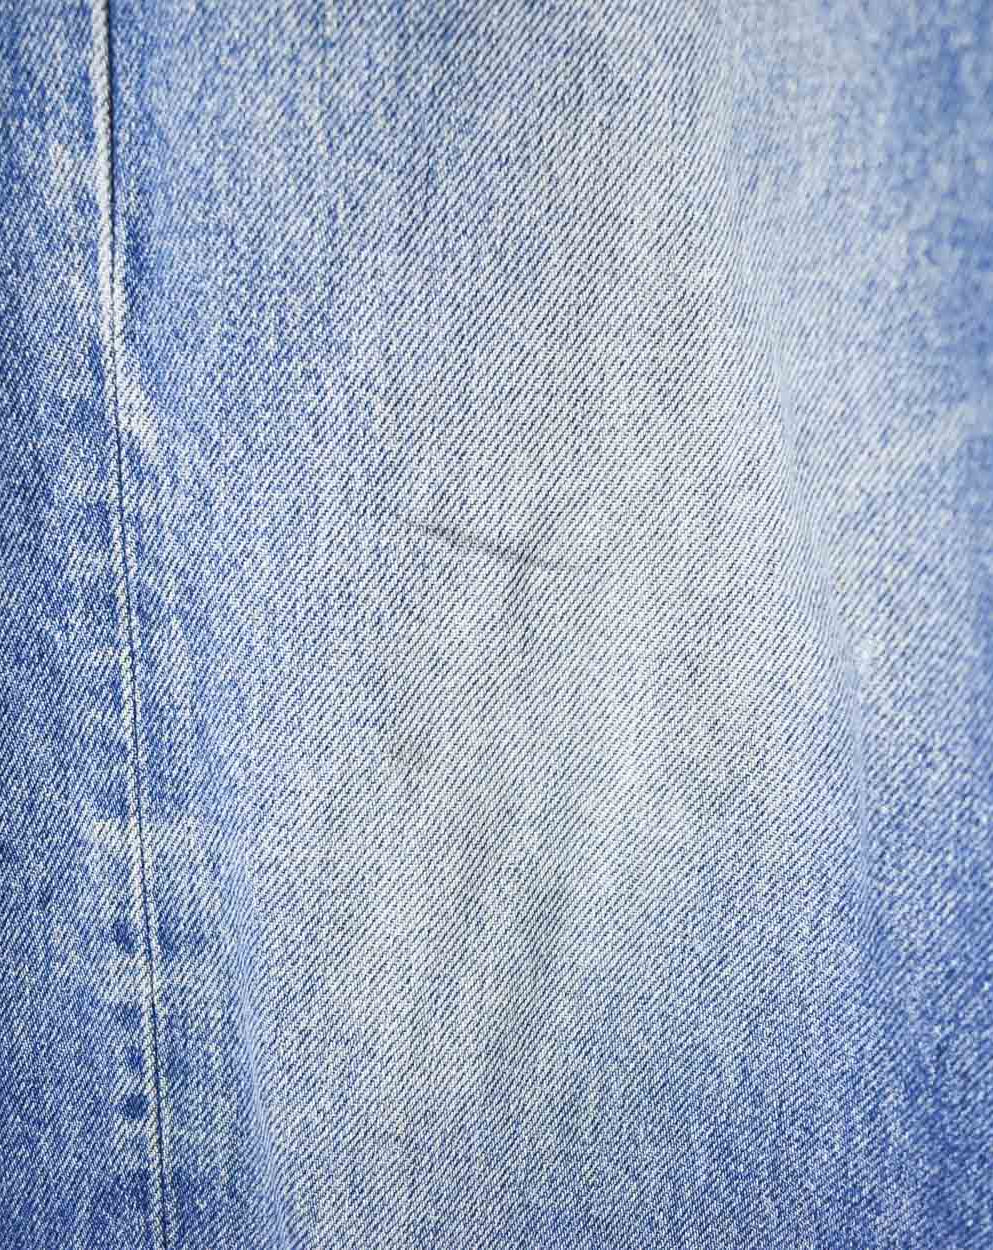 Blue Levi's USA 501 Jeans - W32 L29